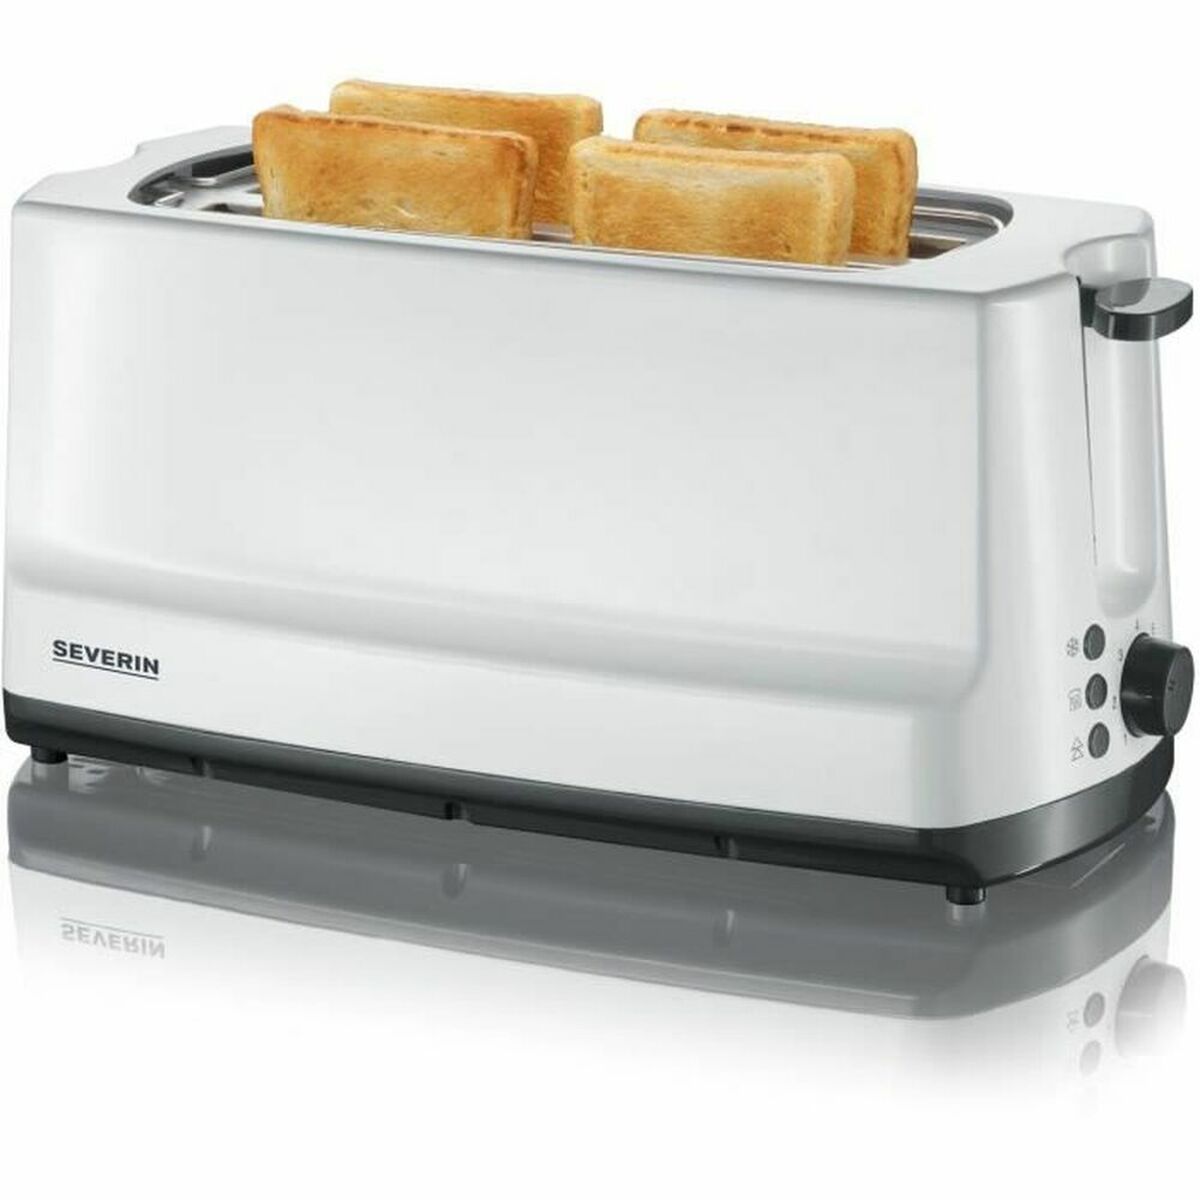 Kaufe Toaster Severin AT 2234 1400 W 1400 W bei AWK Flagship um € 61.00